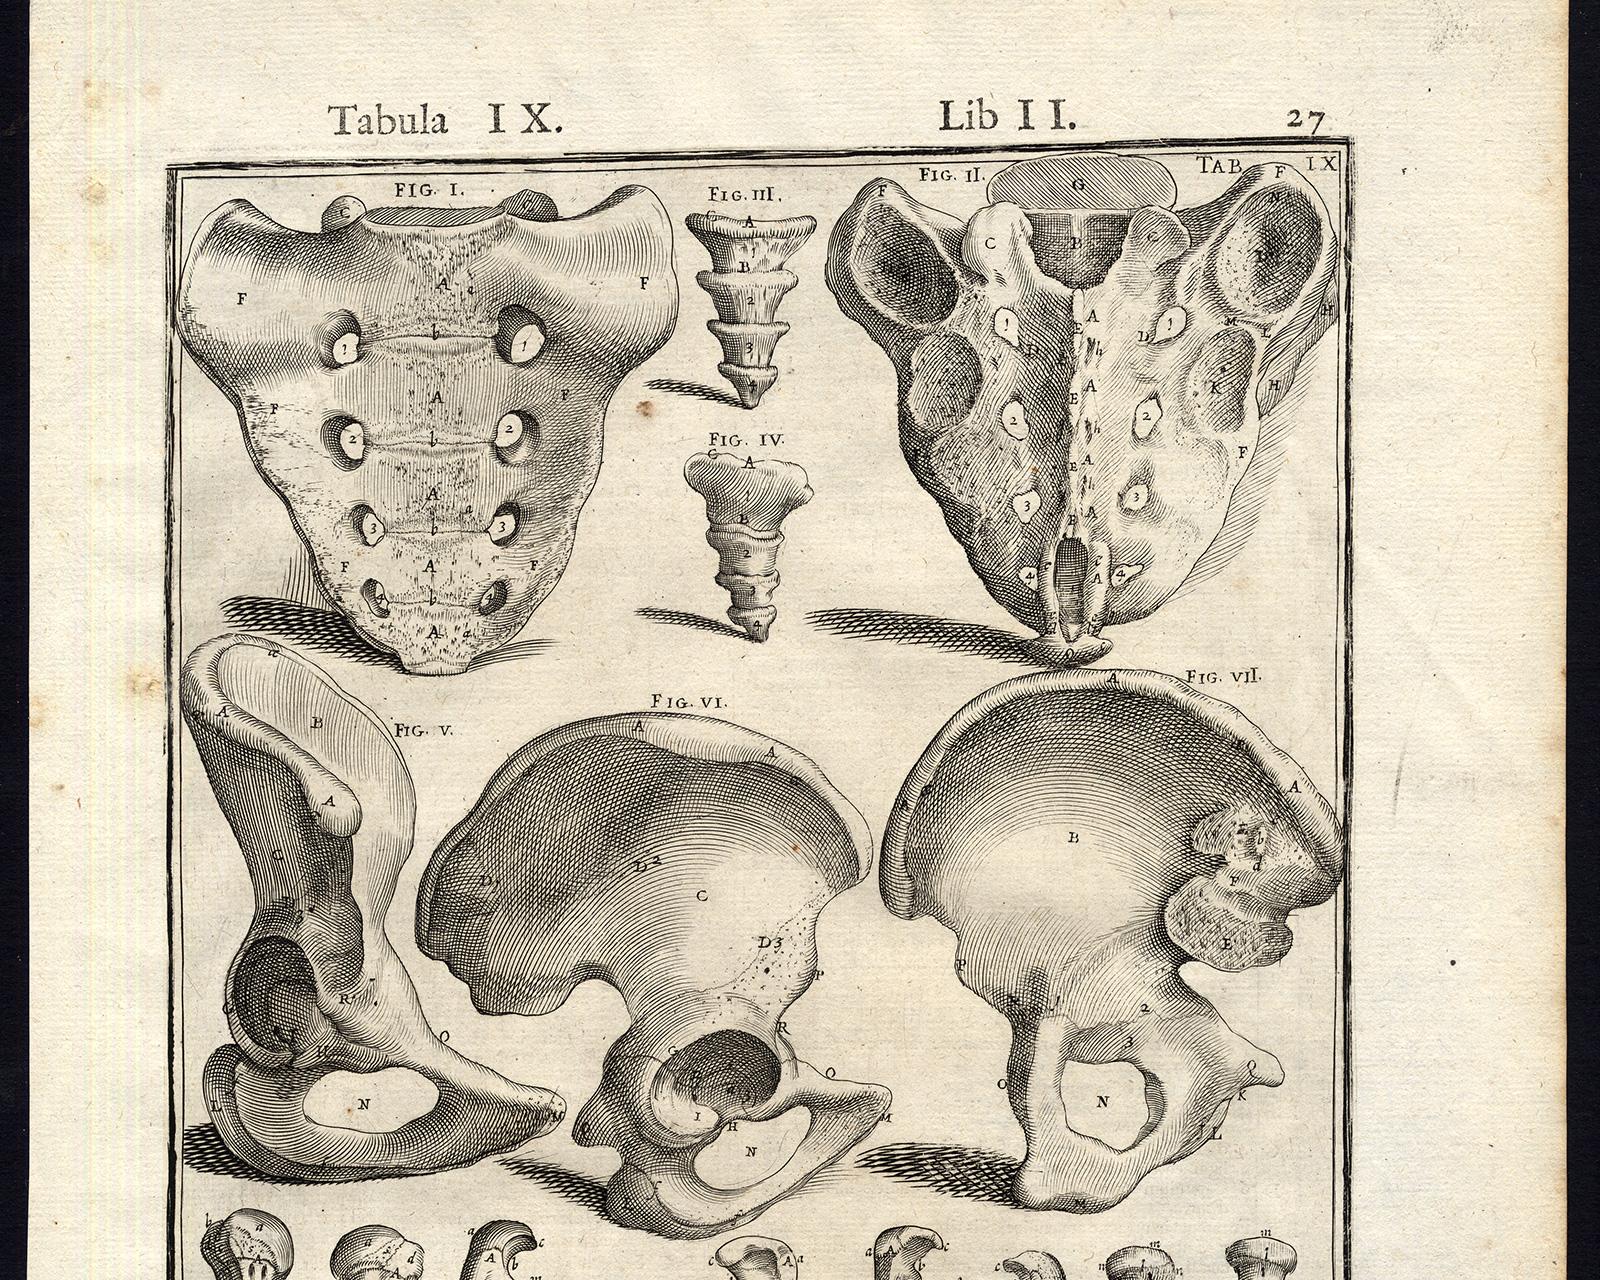 Anatomical print - bones of hands, arms, etc - by Spigelius - Engraving - 17th c - Old Masters Print by Adrianus Spigelius